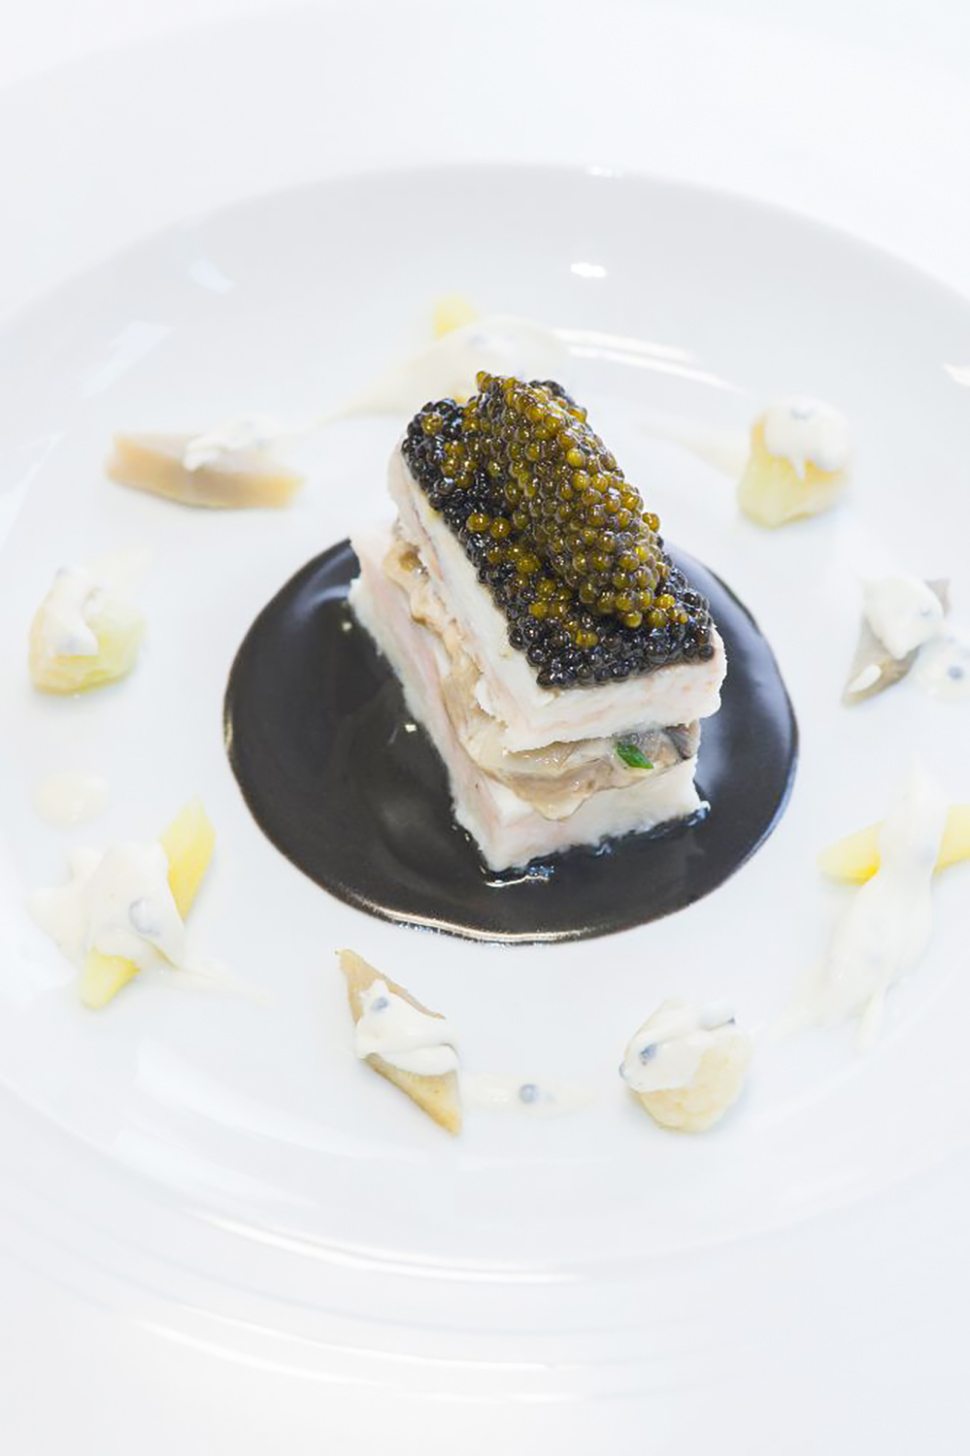 10 Aile de raie refroidie au caviar, petit ragoût breton